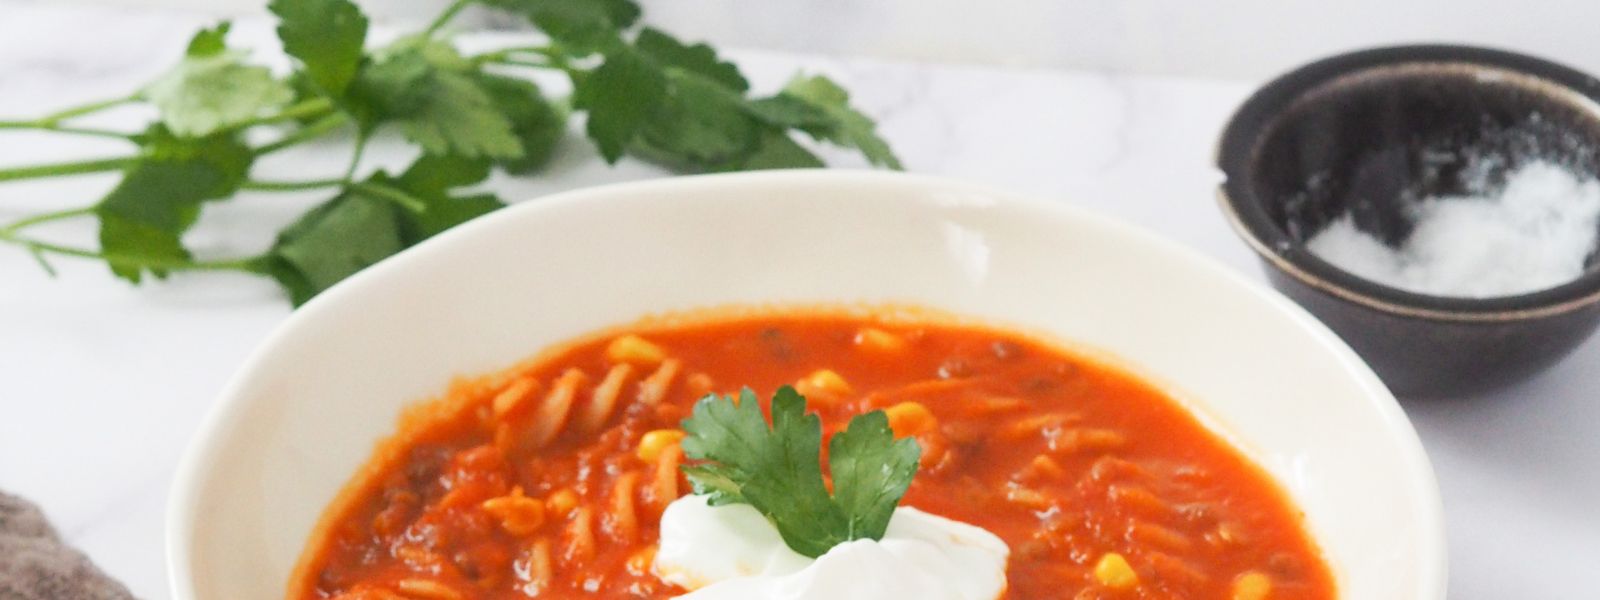 Tomatovo-čočková polévka